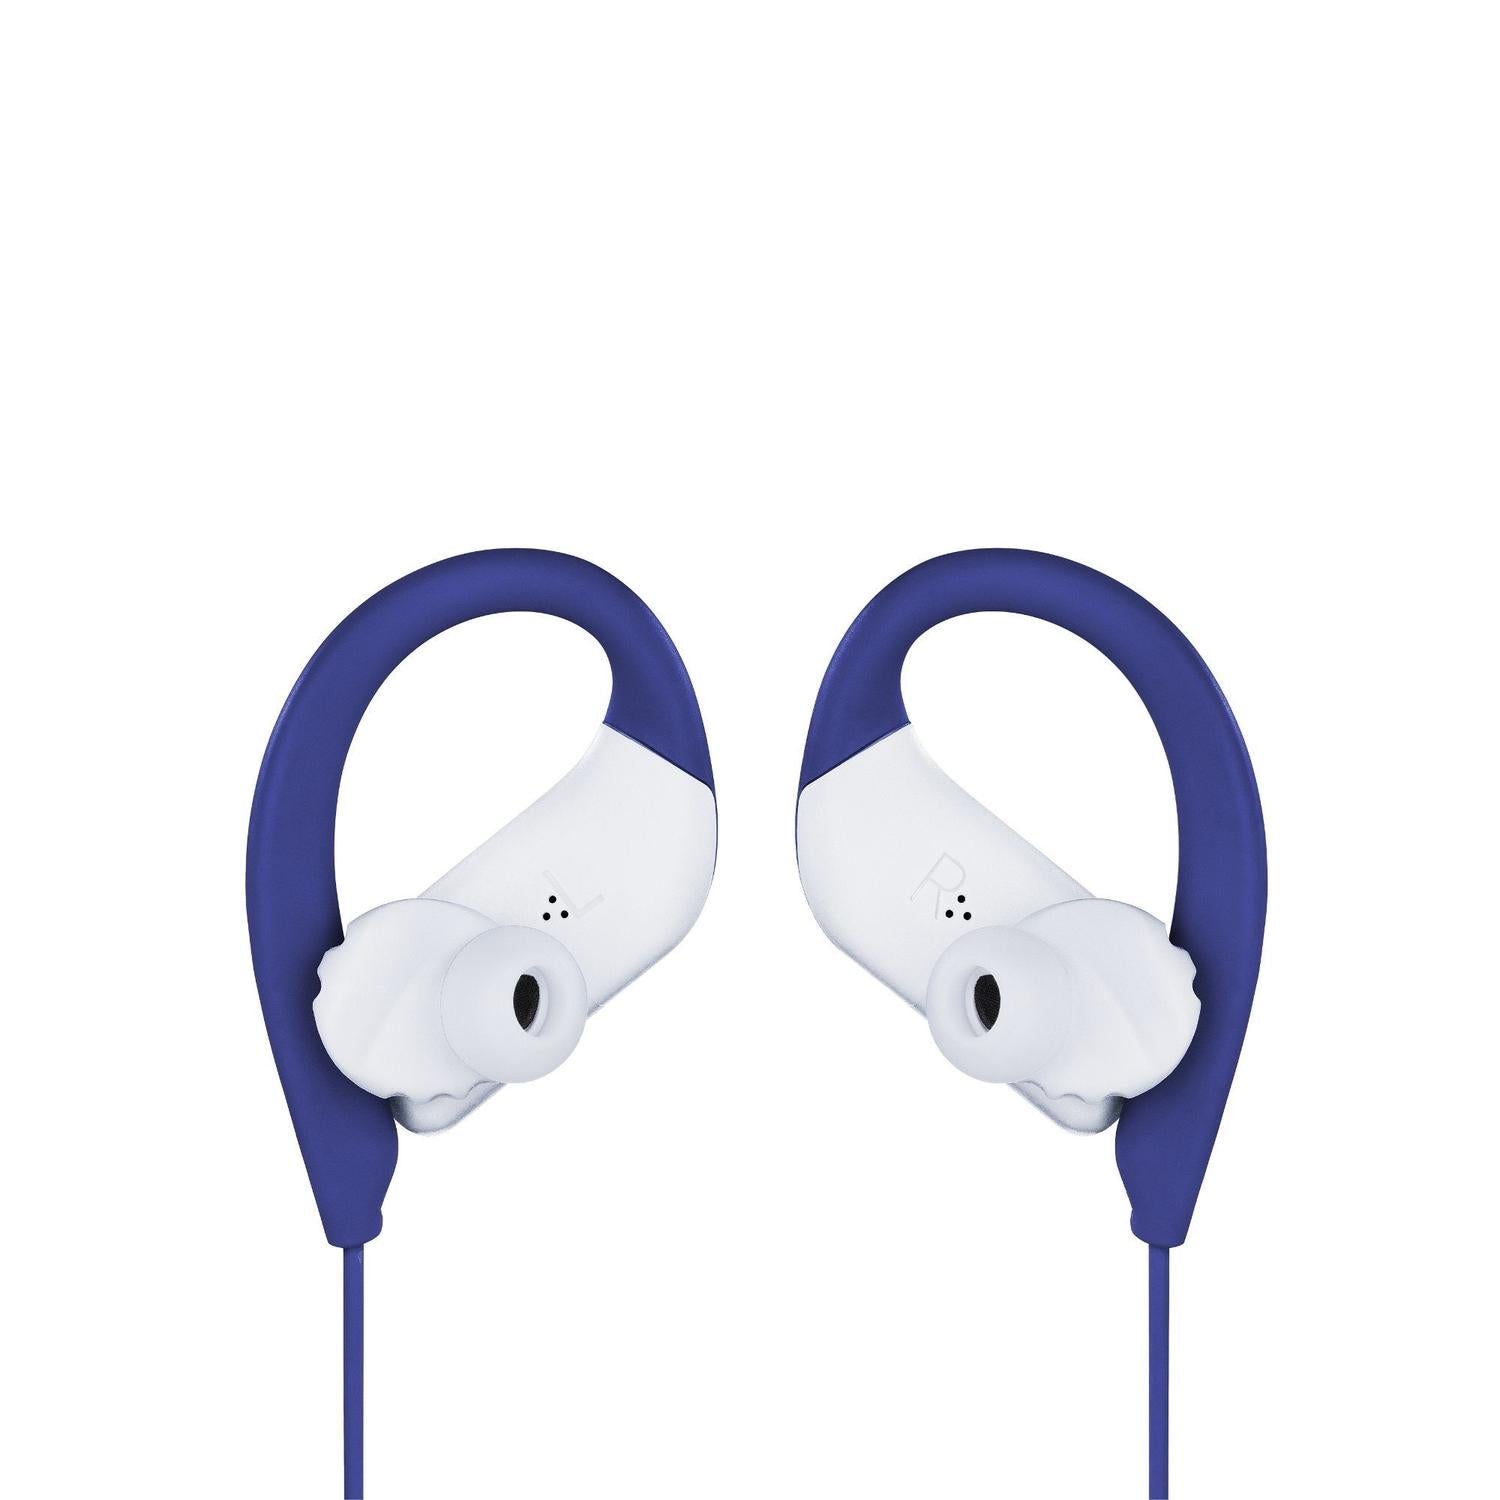 Bluetooth auriculares deportivos jbl resistencia sprint sprint corporation  audio inalámbrico, auriculares, electrónica, Bluetooth, dispositivo  electronico png